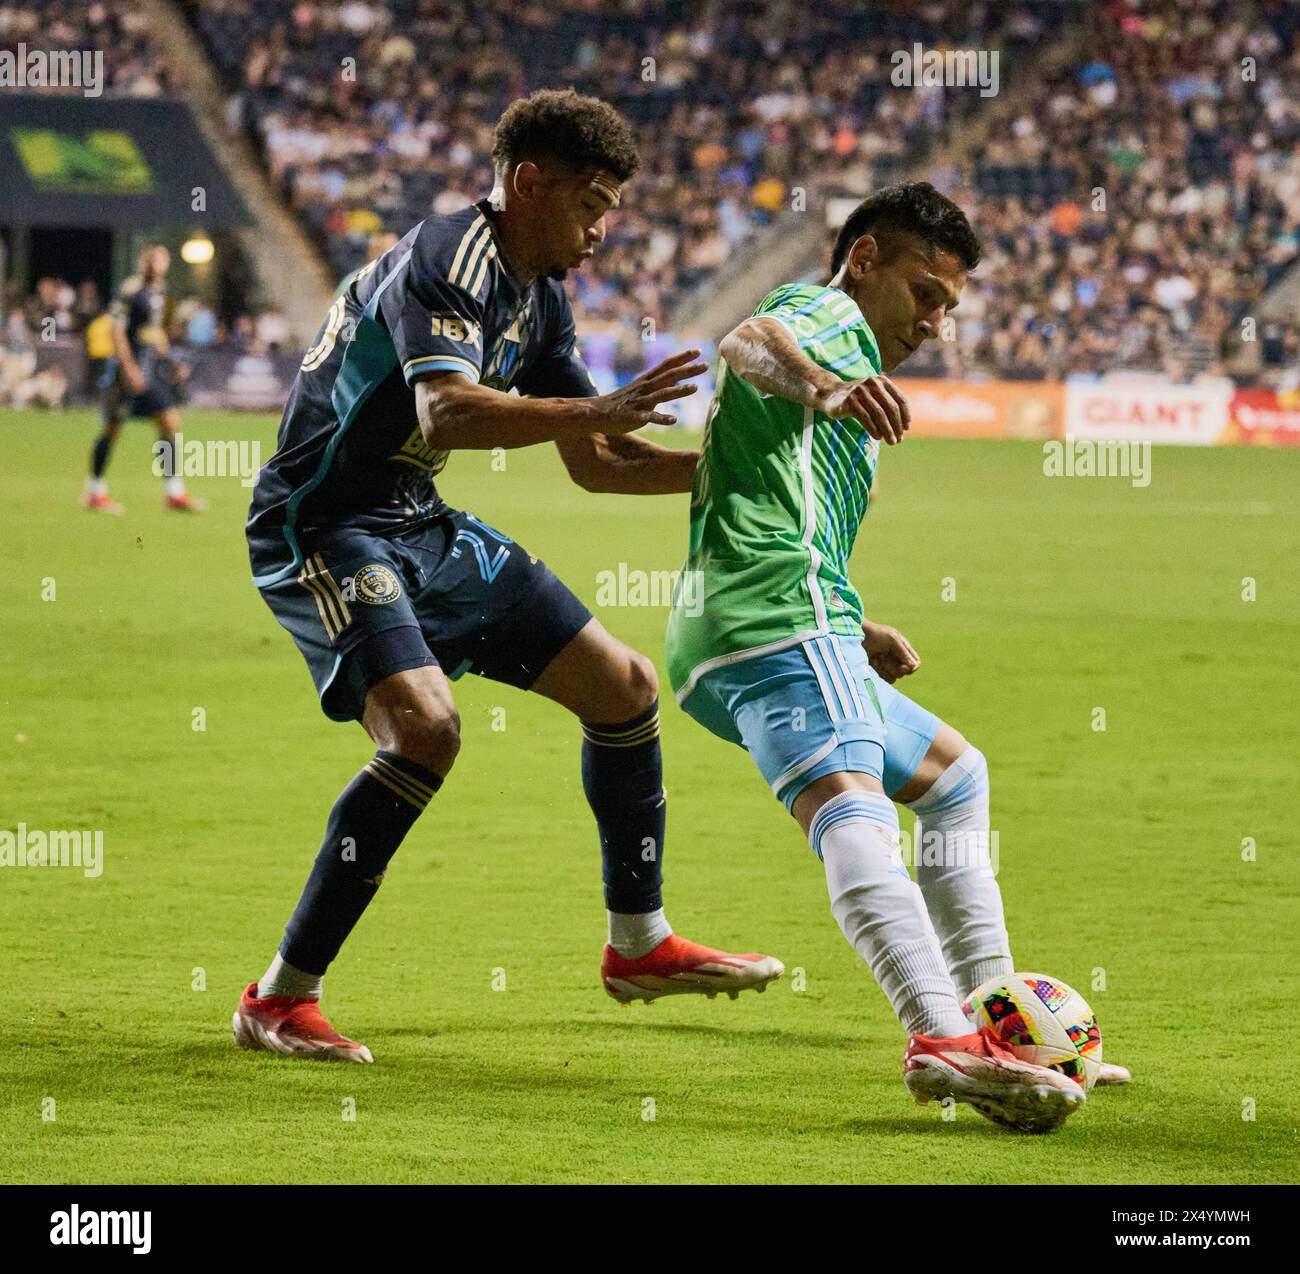 MLS Match between Philadelphia Union and Seattle Sounders FC at Subaru Park. Stock Photo